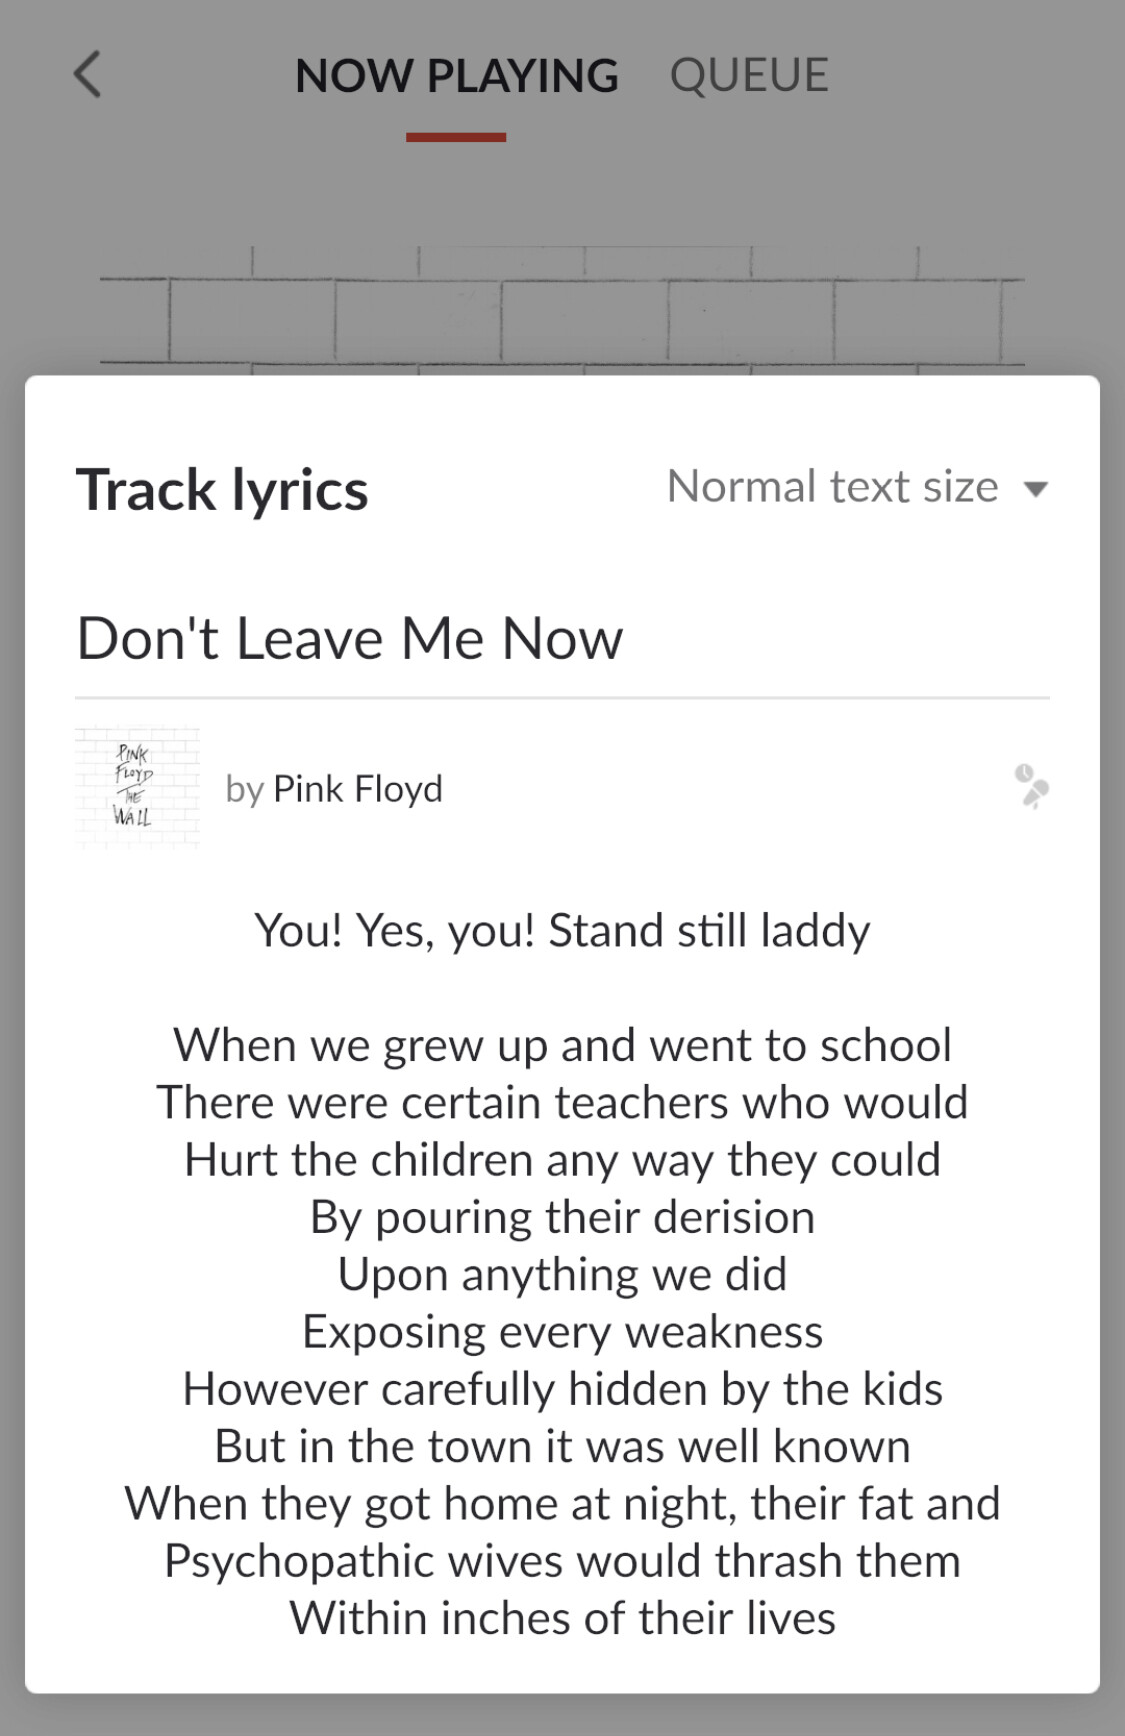 Wrong lyrics in TIDAL song - Metadata - Roon Labs Community